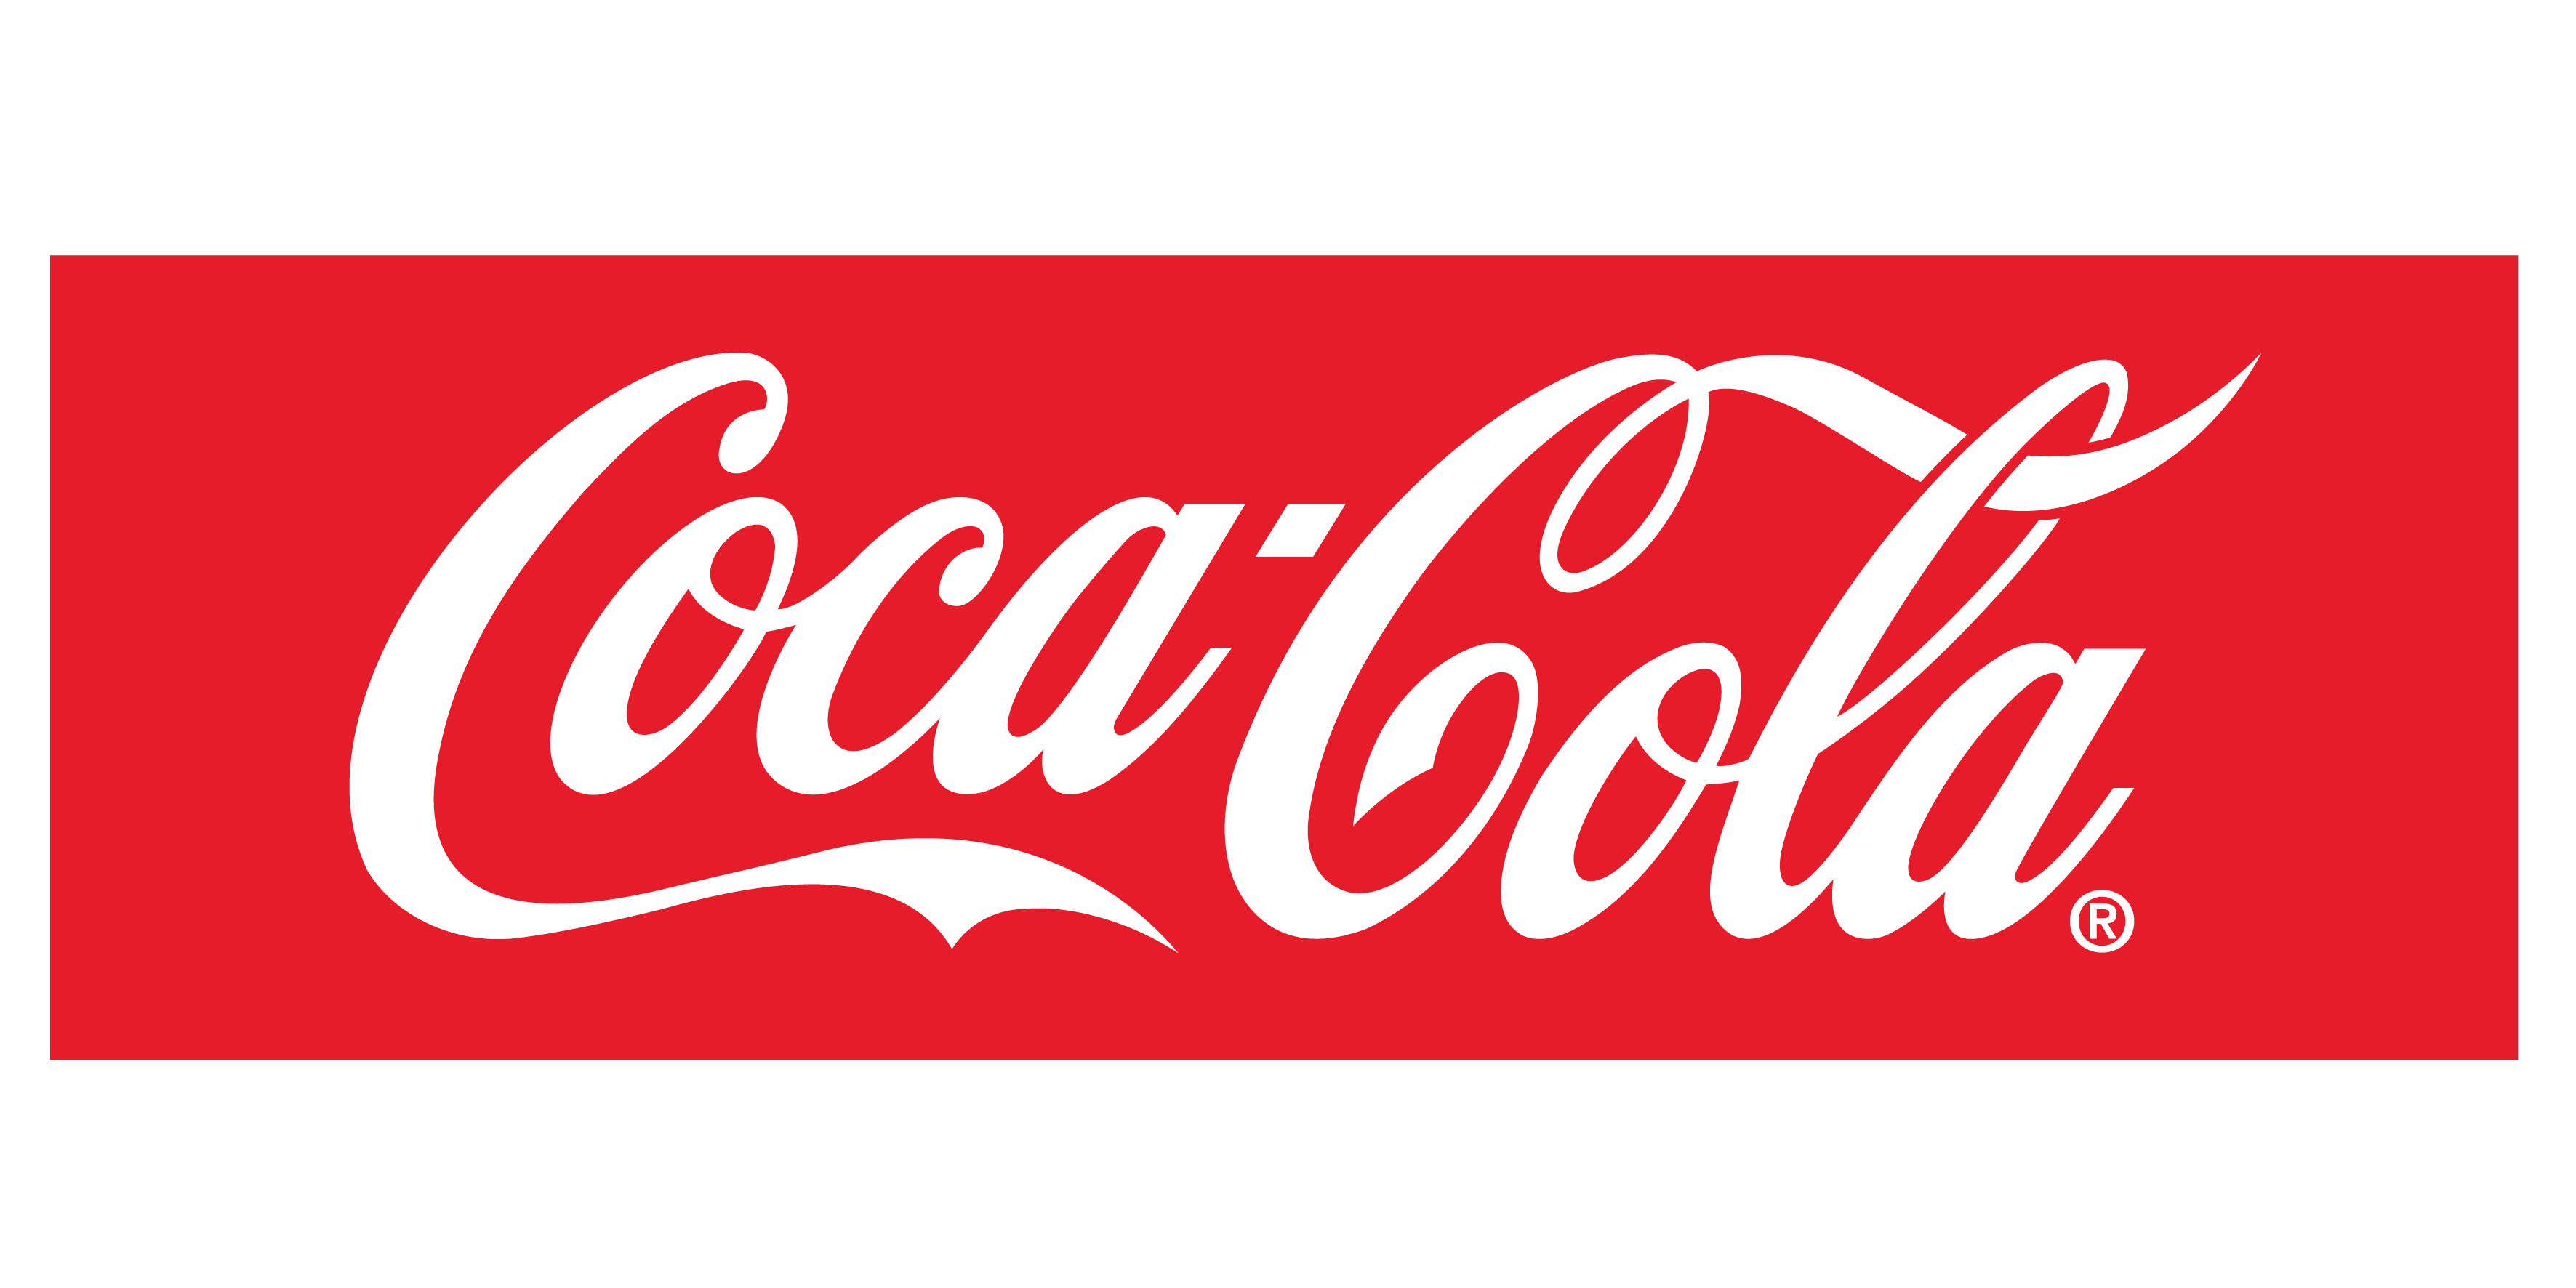 Coca_cola_logo-9